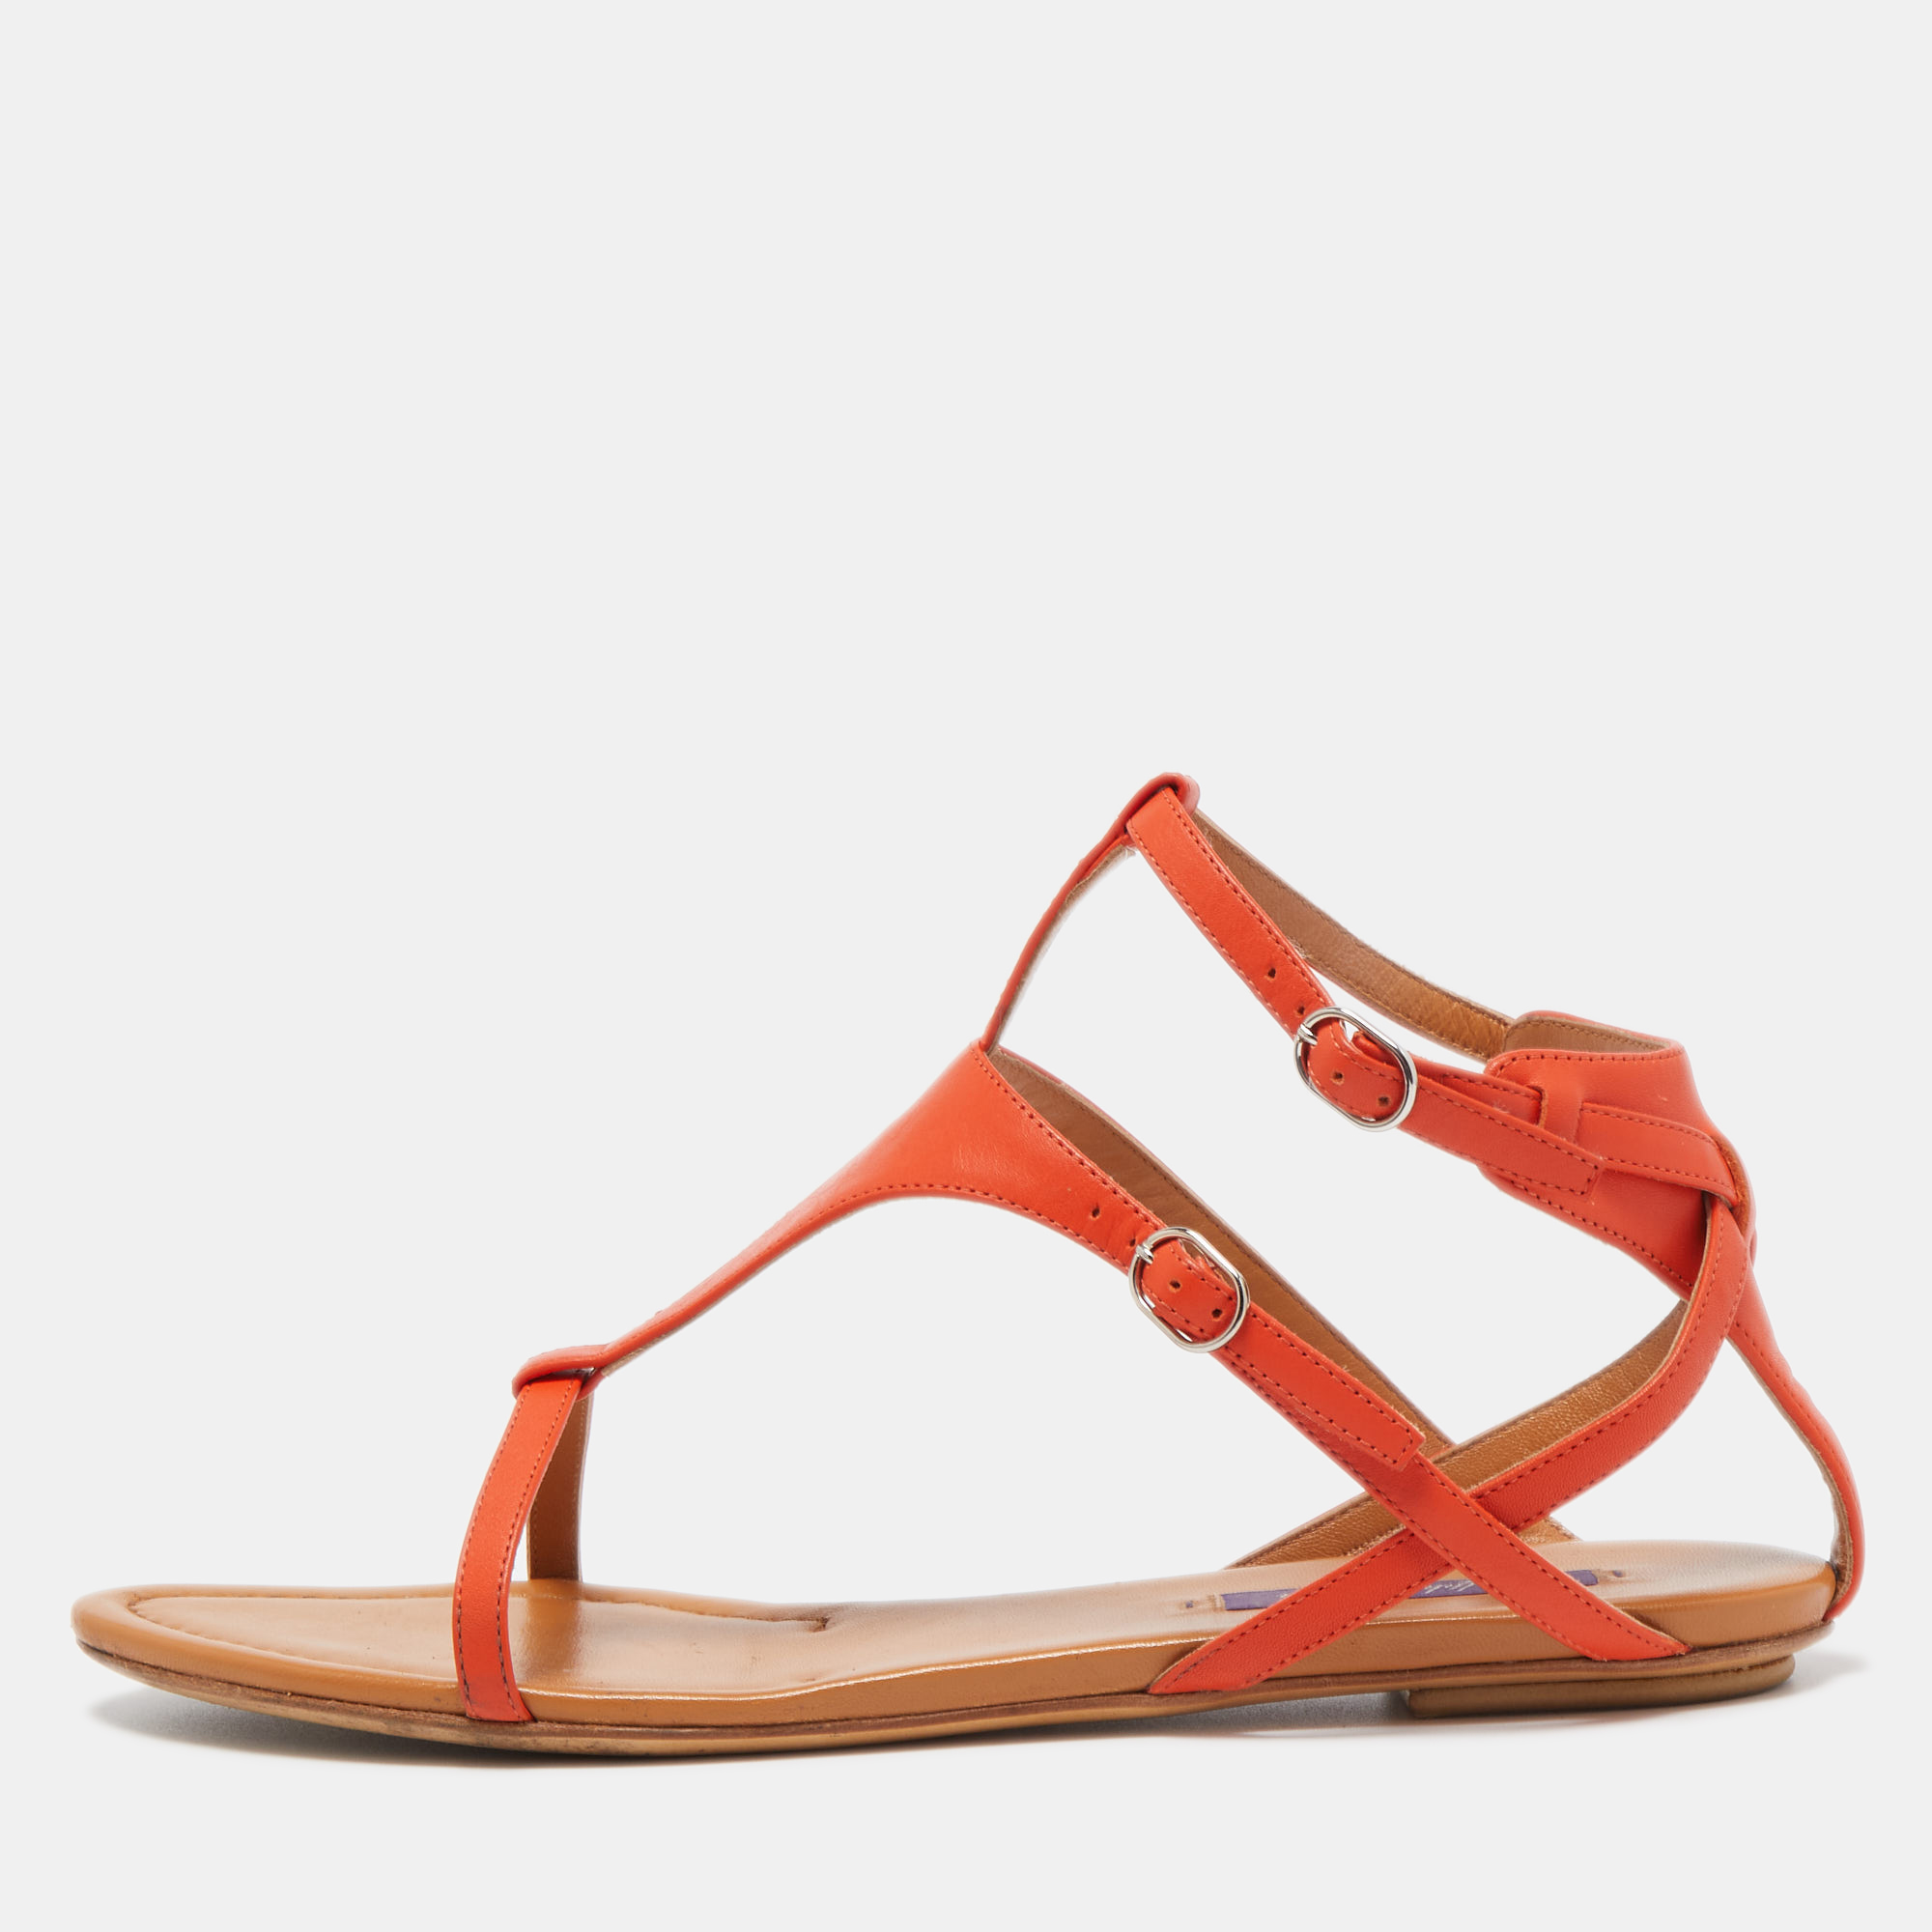 Pre-owned Ralph Lauren Orange Leather Flat Sandals Size 39